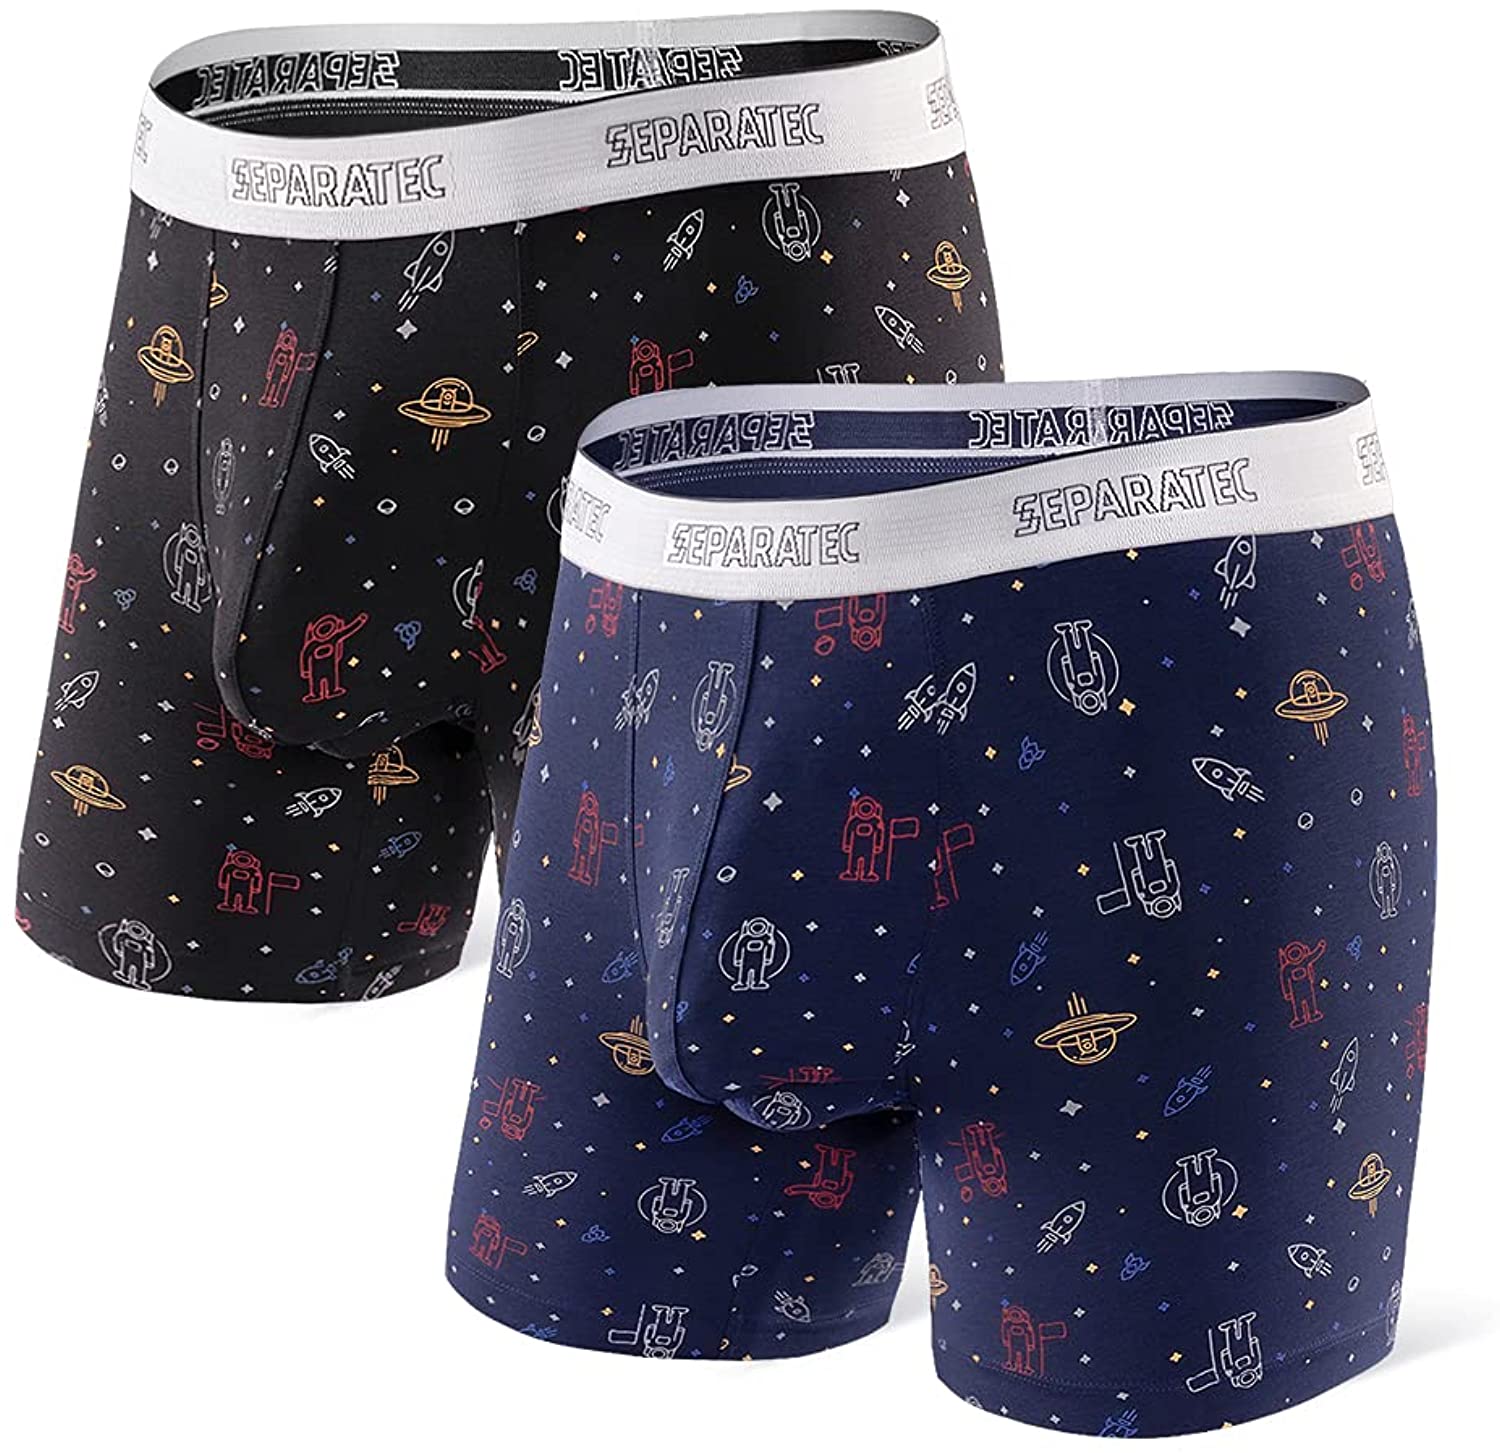 Buy Separatec Men's Underwear Dual Pouch Ultra Soft Micro Modal Comfort Fit Boxer  Briefs 3 Pack online